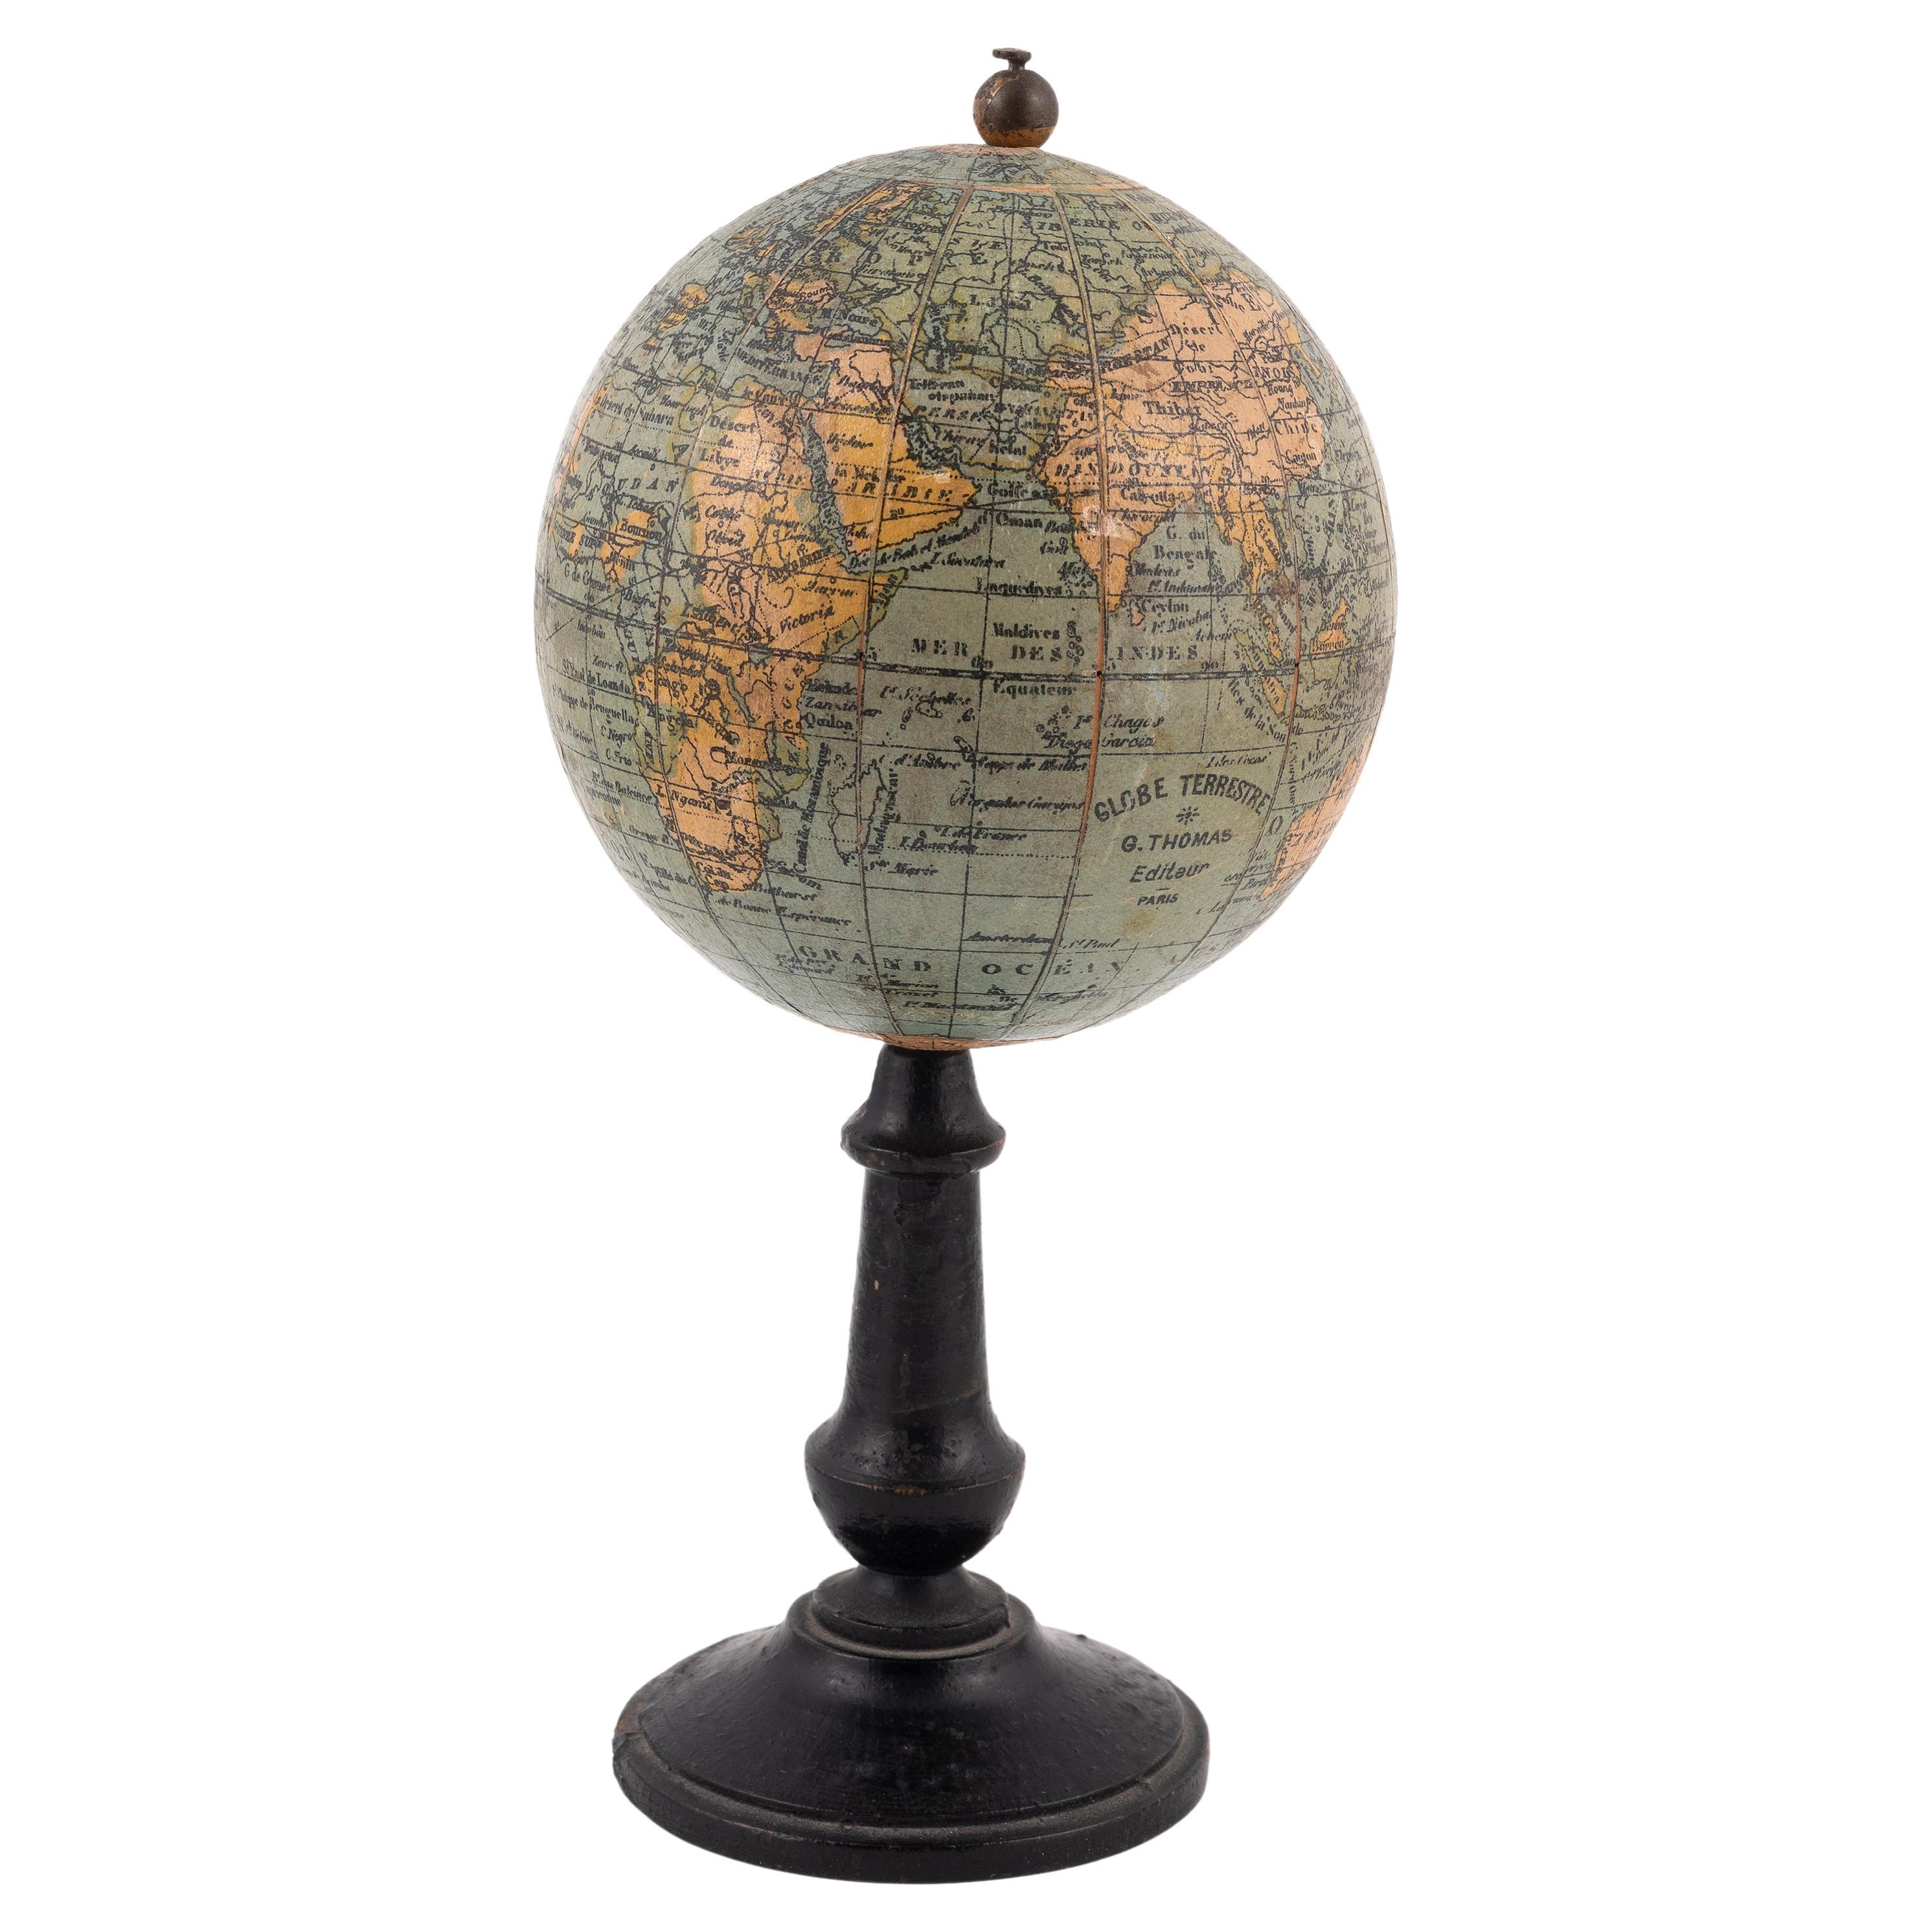 An Early 20th-Century 3-inch Diameter French Terrestrial Desk Globe